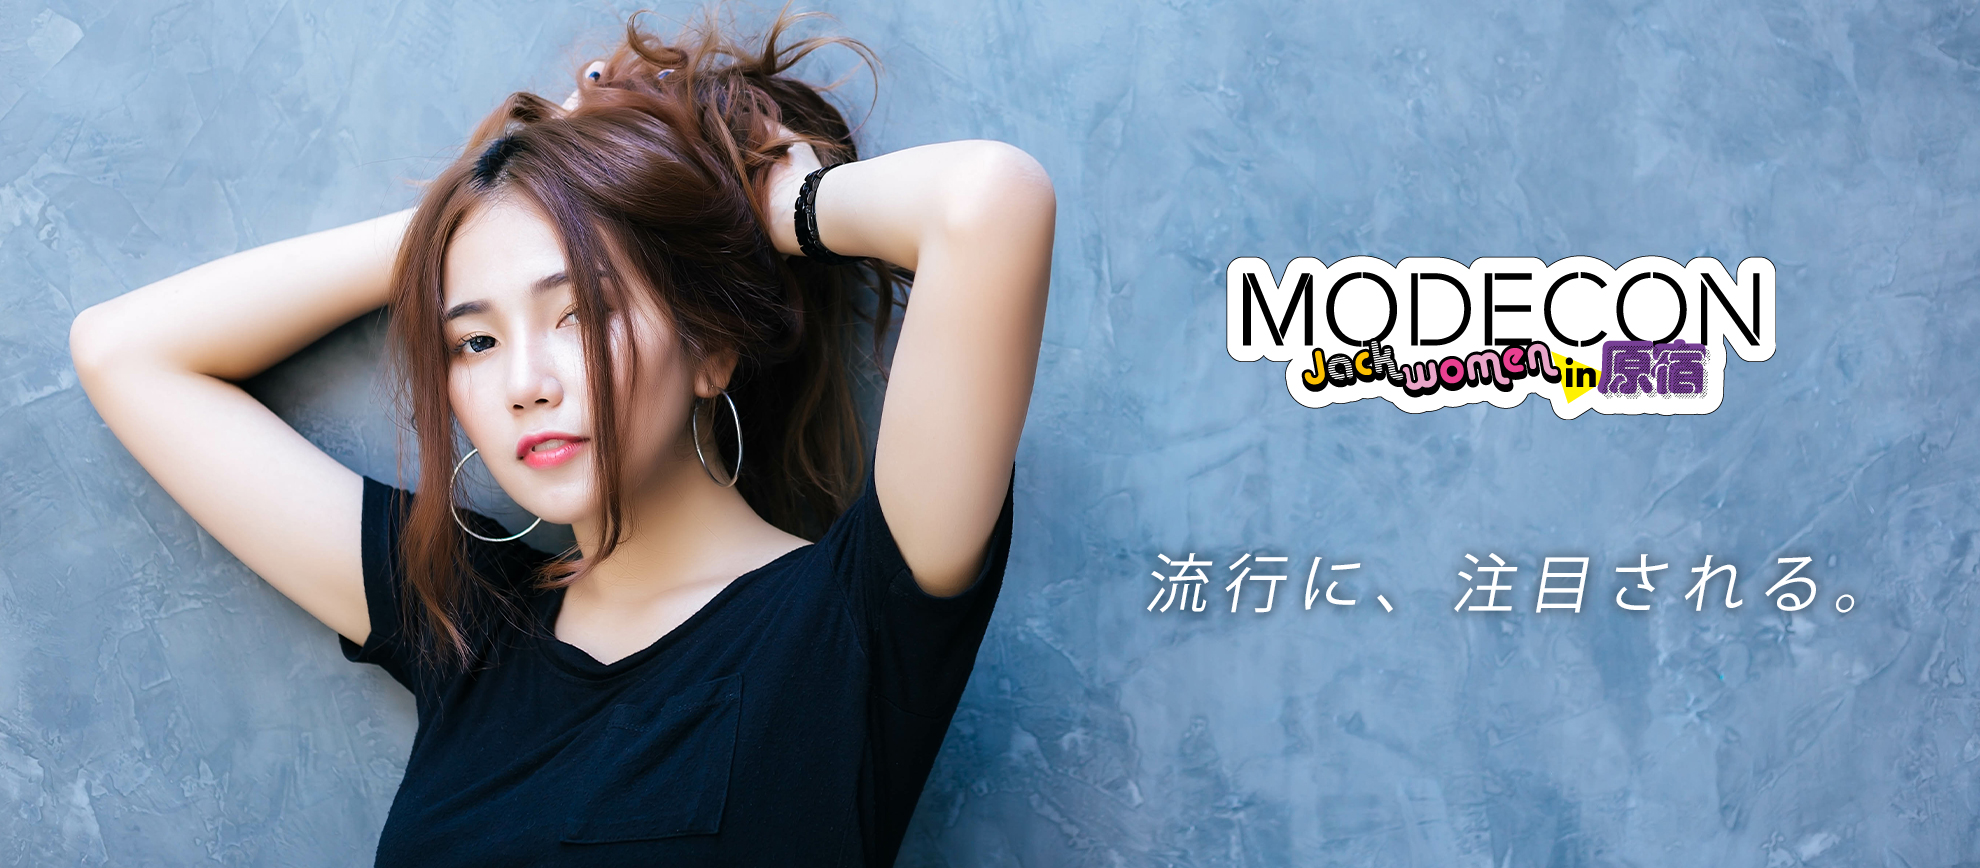 MODECON/Jack women in 原宿